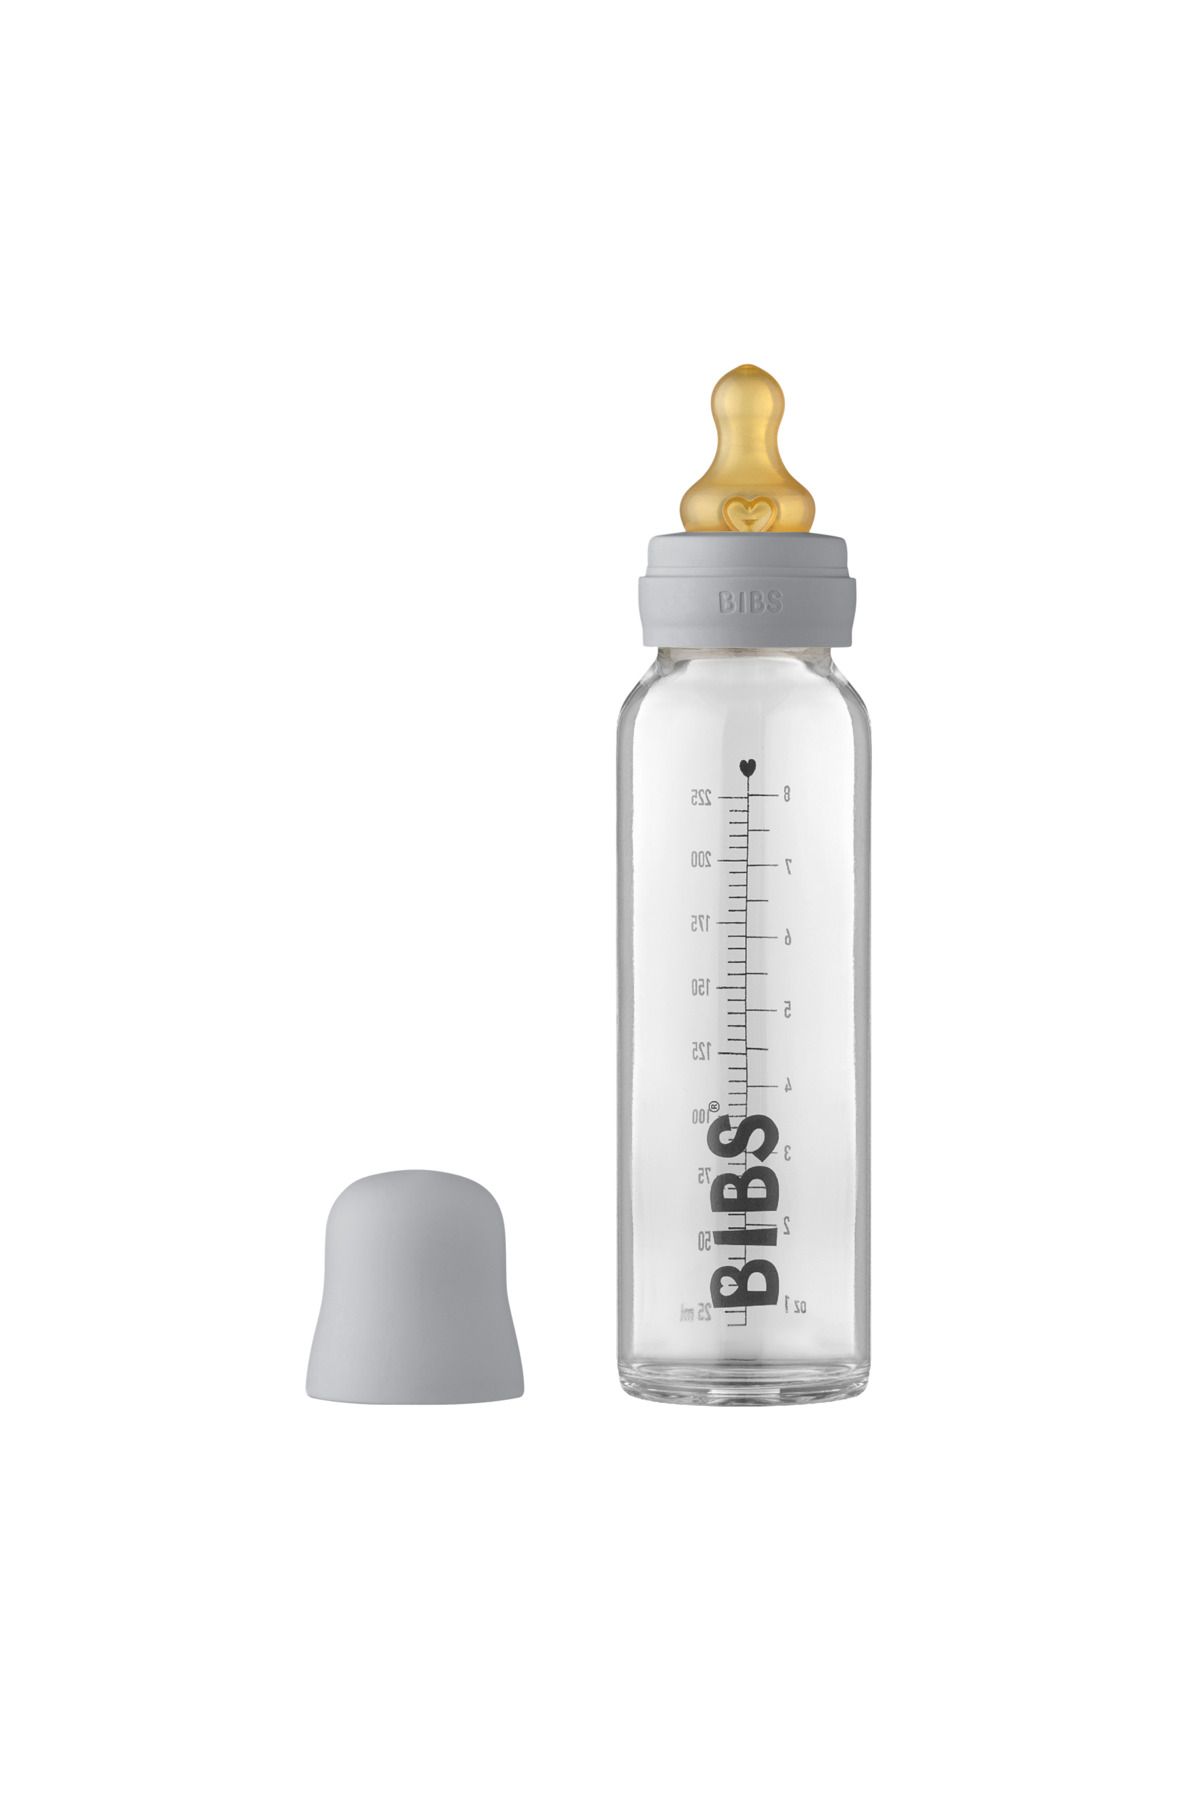 Bibs Baby Glass Bottle Complete Set 225ml Cloud